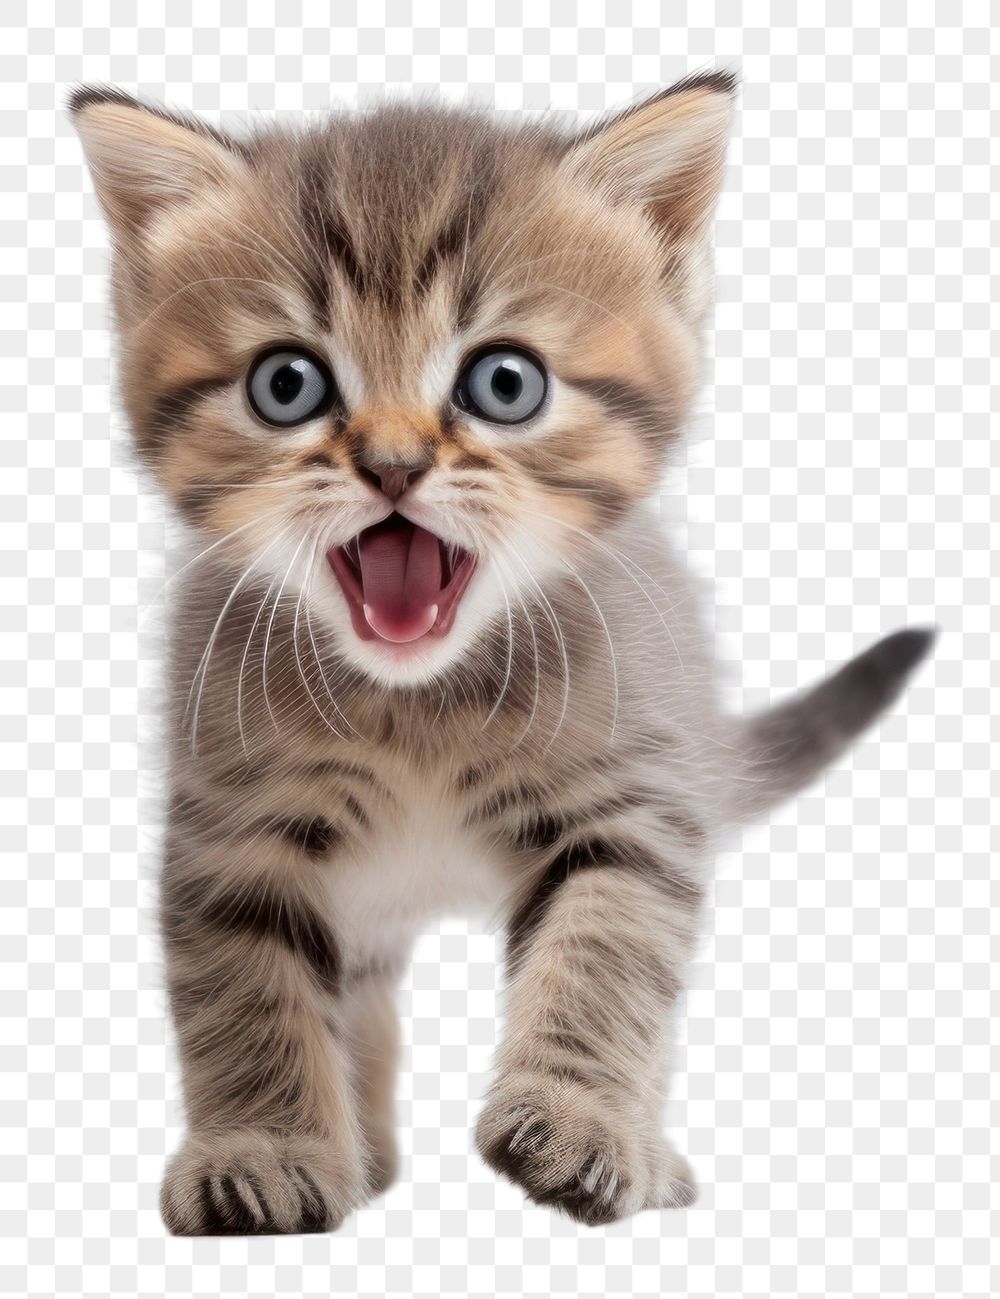 PNG Kitten mammal animal pet. AI generated Image by rawpixel.